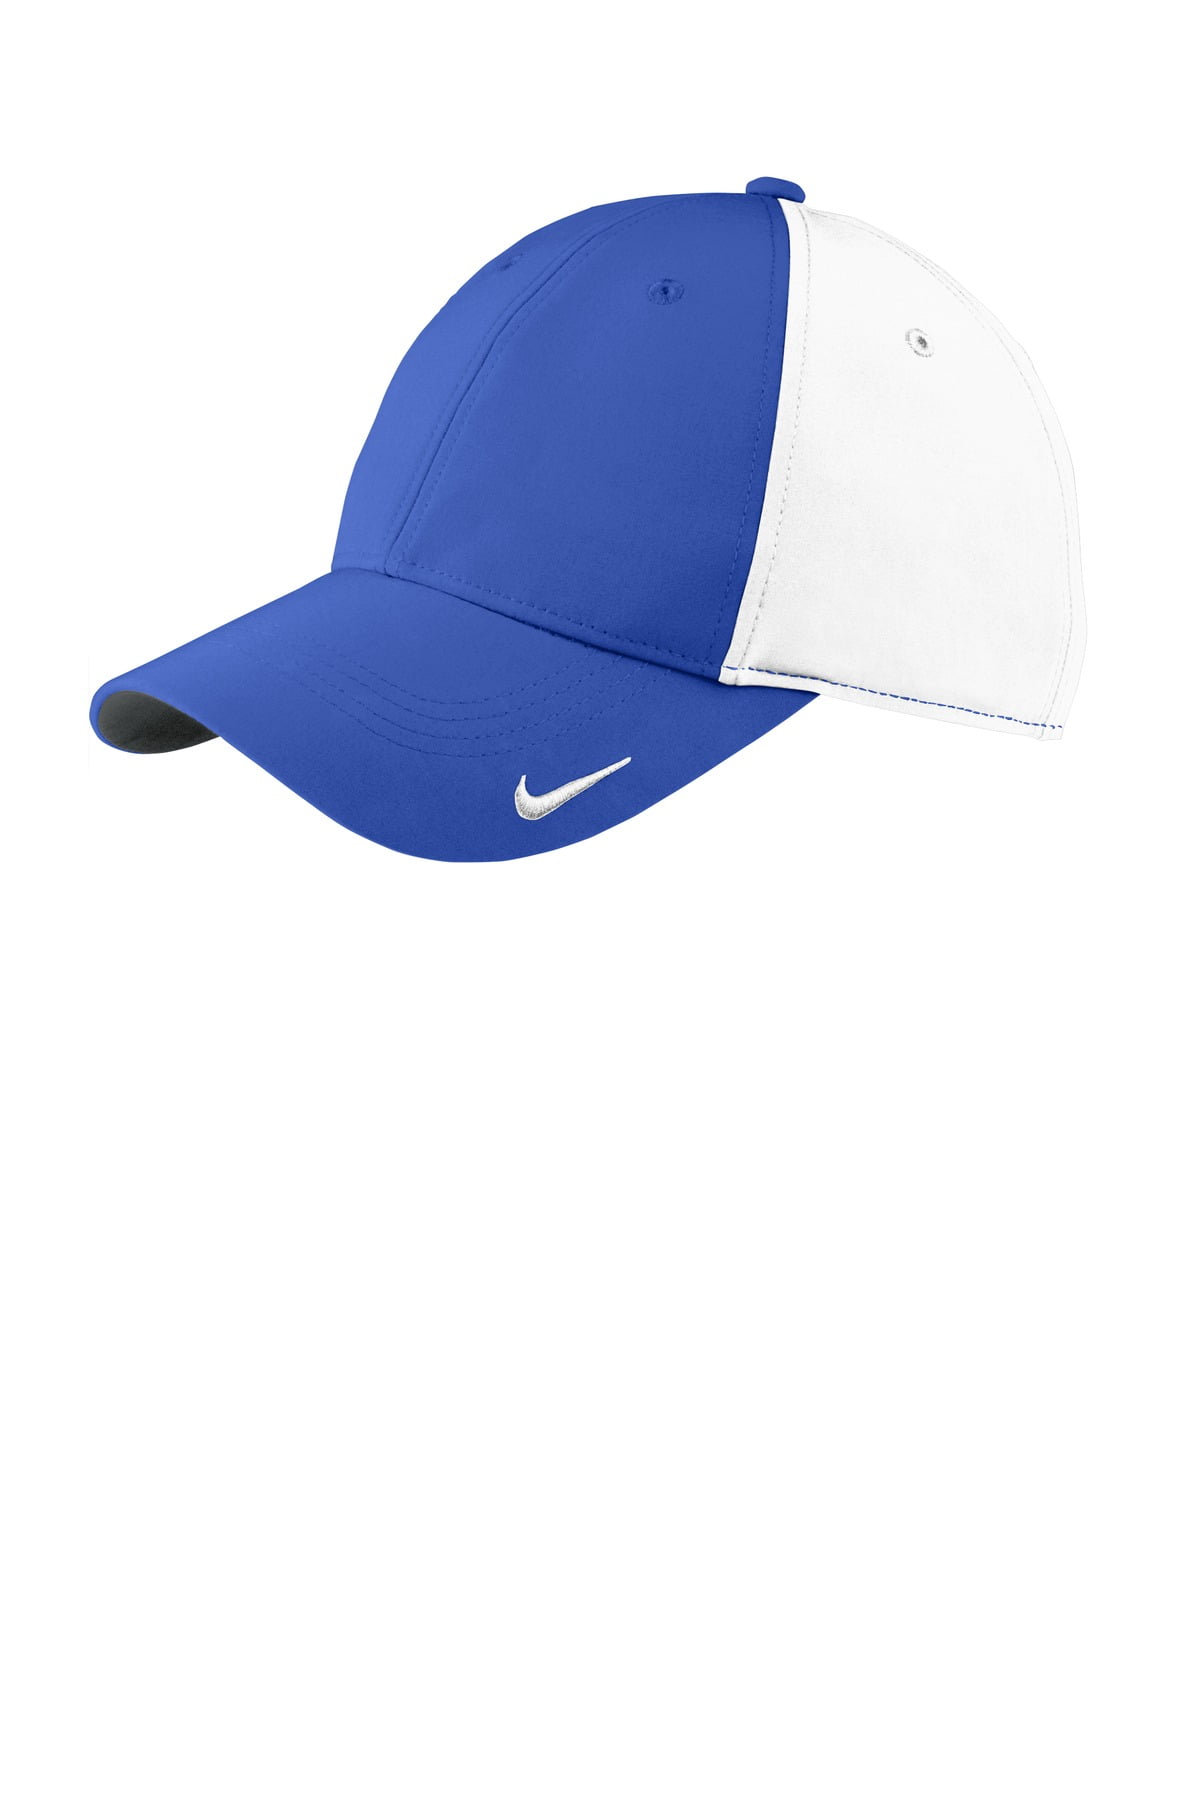 Nike Golf Swoosh Legacy 91 Cap, Style 779797 - Walmart.com